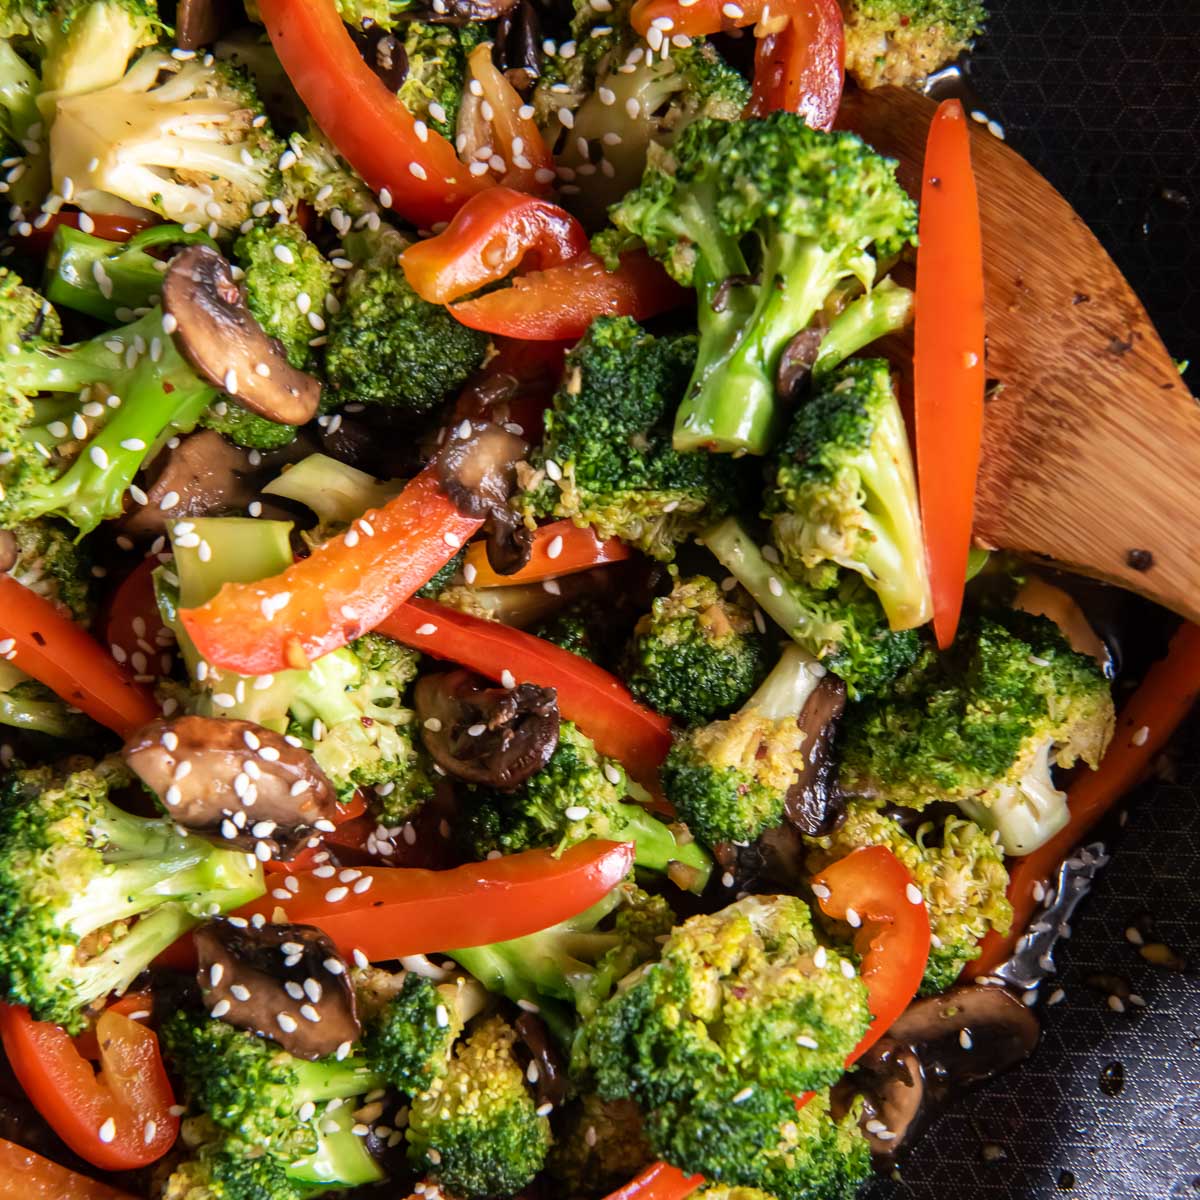 Broccoli stir-fry recipes